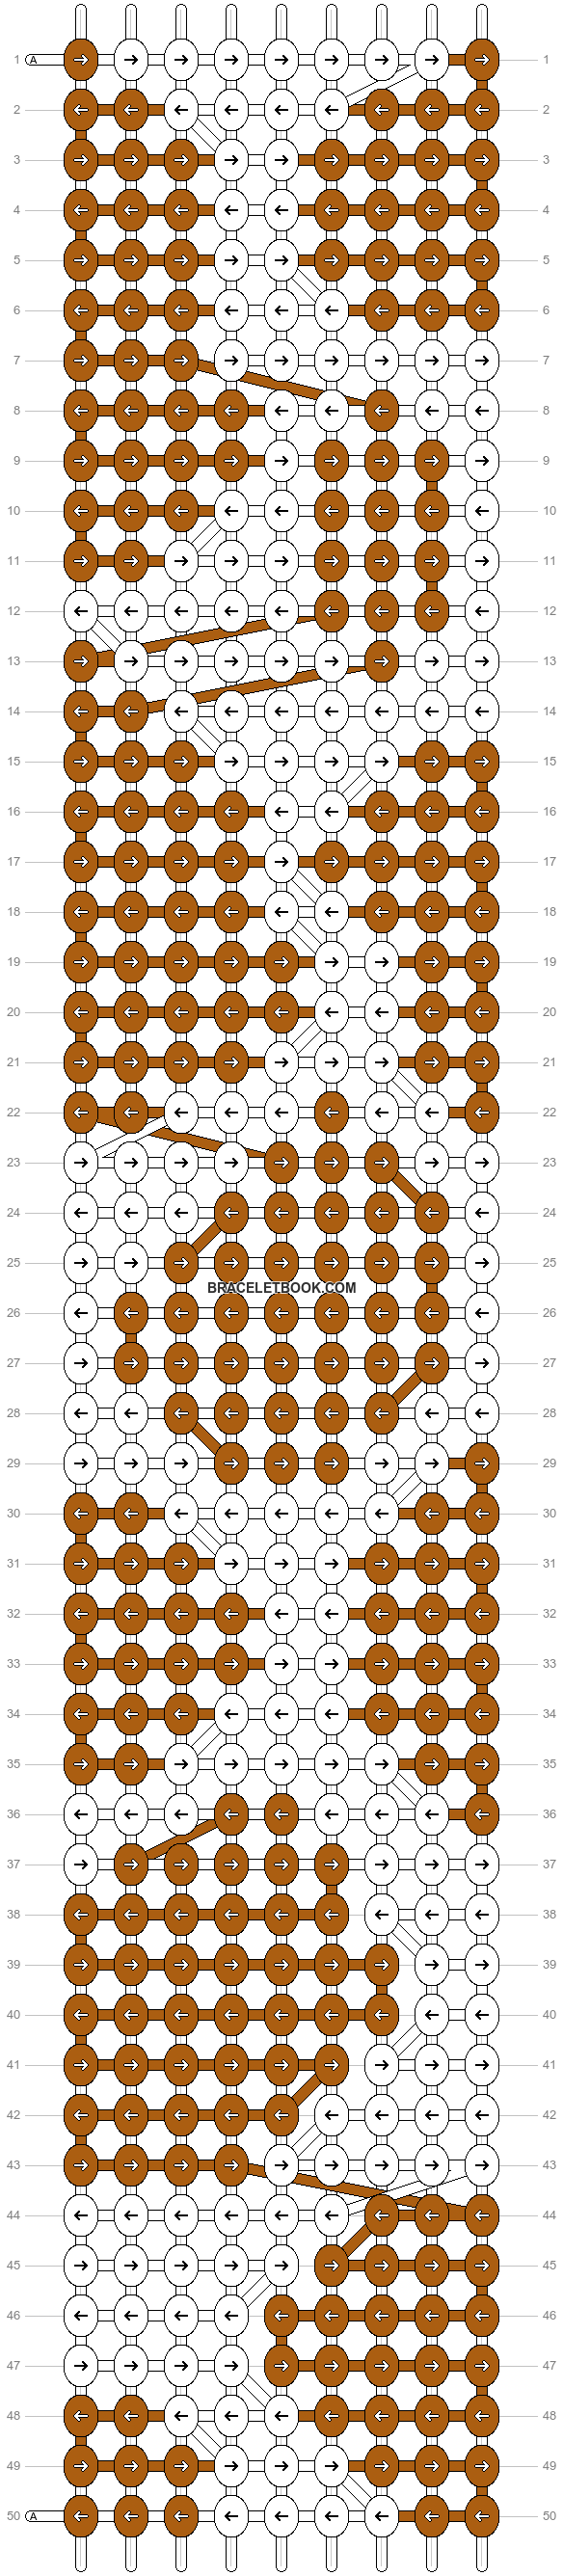 Alpha pattern #51266 variation #82033 pattern